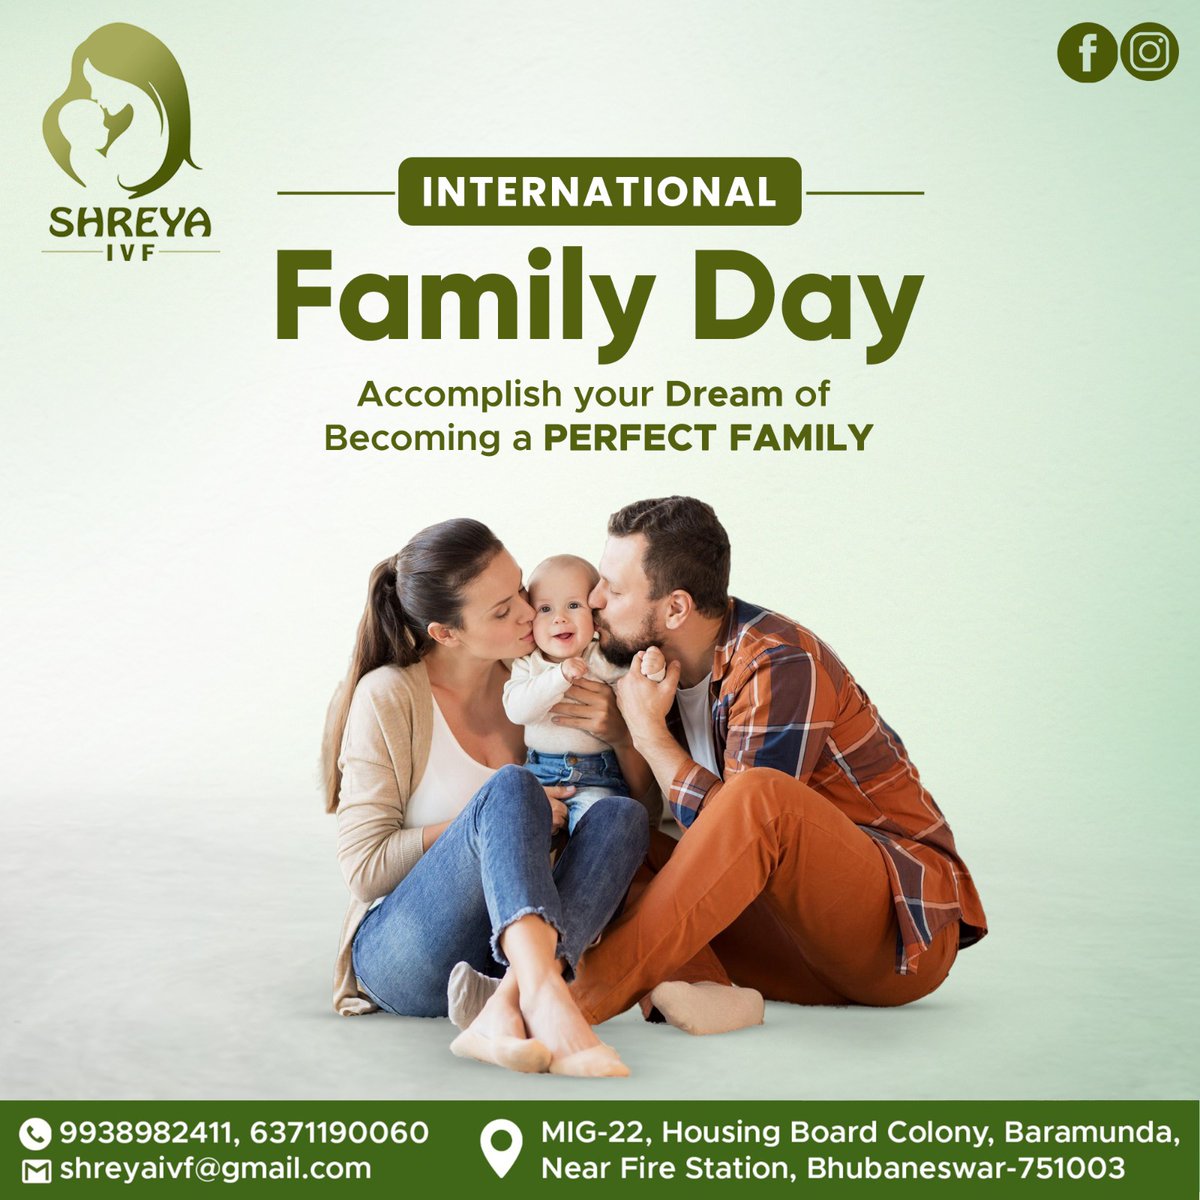 Happy International Family Day from Shreya IVF Centre!

#internationalfamilyday #FamilyDay2024 #parenthood #family #familytime #familygoals #familyphotography #familypictures #familyday #shreyaivfbaby #shreyaivf #shreyaivfcentre #ivfsuccess